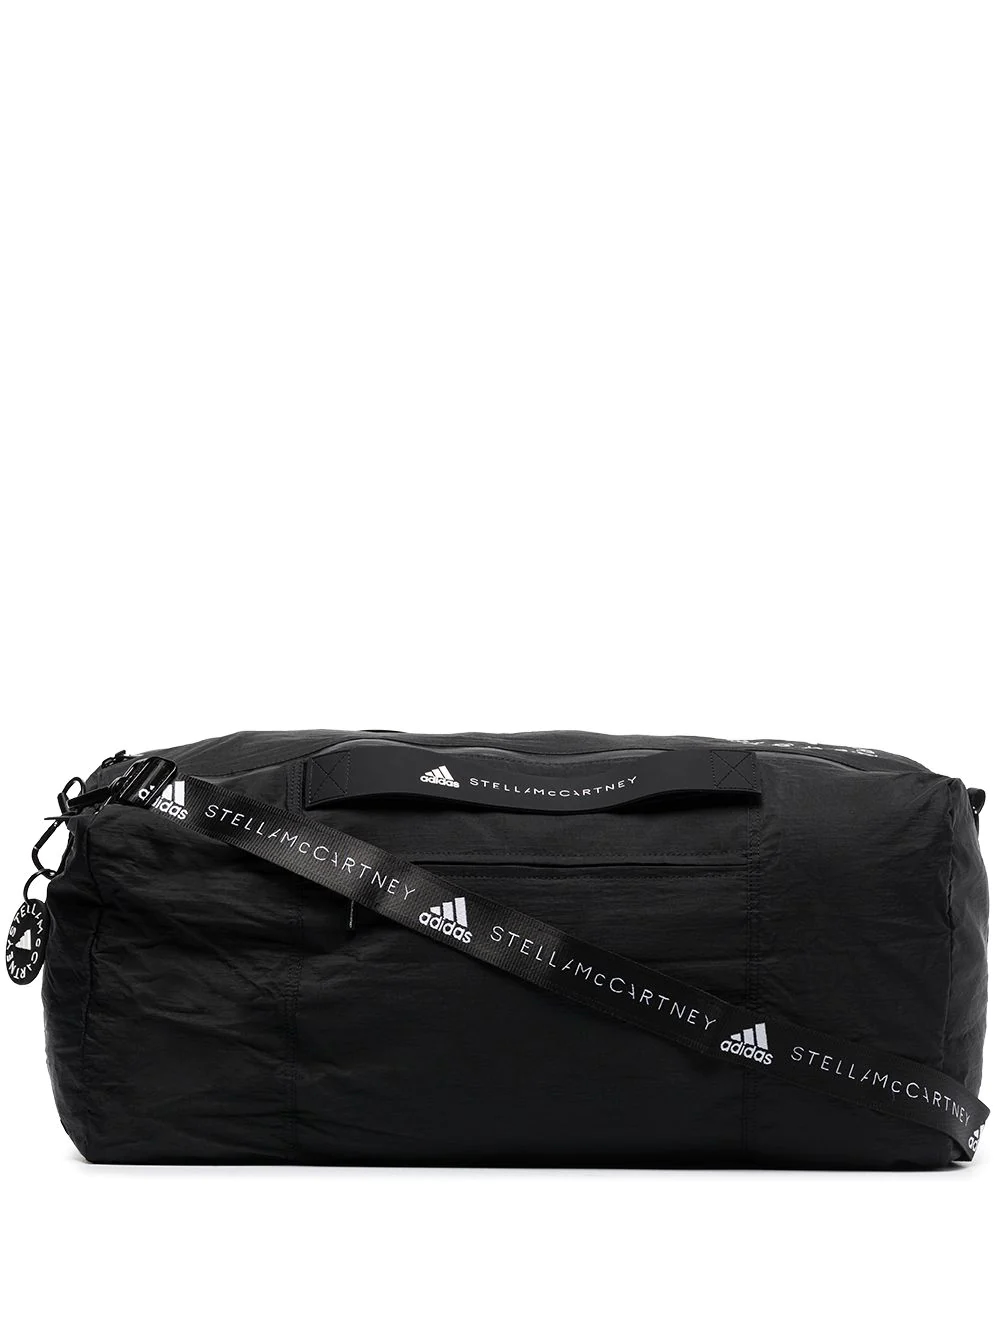 Спортивная сумка Adidas Studio от Stella McCartney